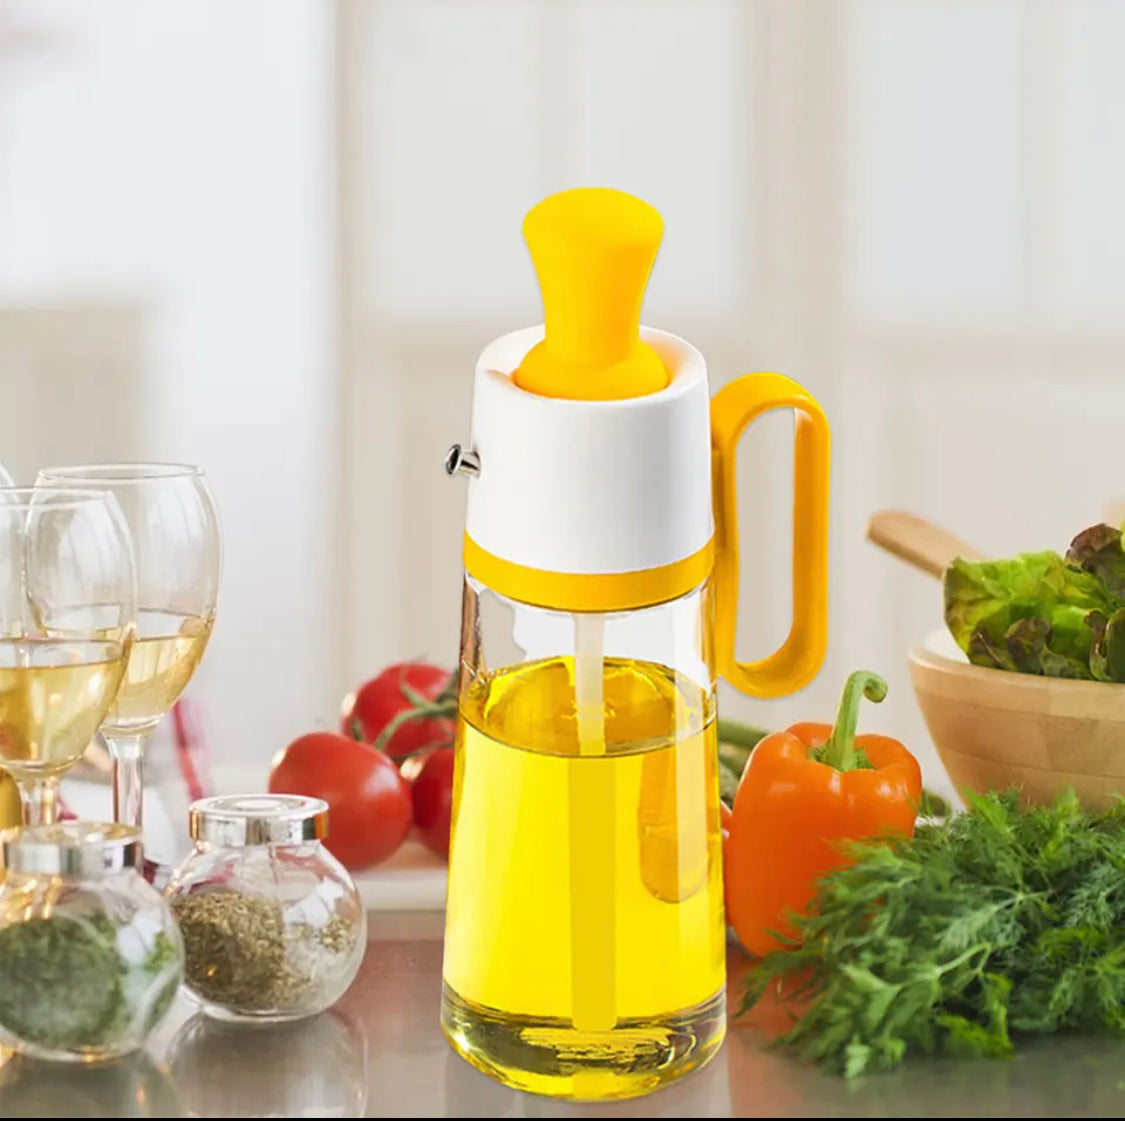 500ml Oil Dispenser Bottle With Brush, Cooking Seasoning Oil Bottle, Multifunctional Oil Bottle With Barbeque Brush